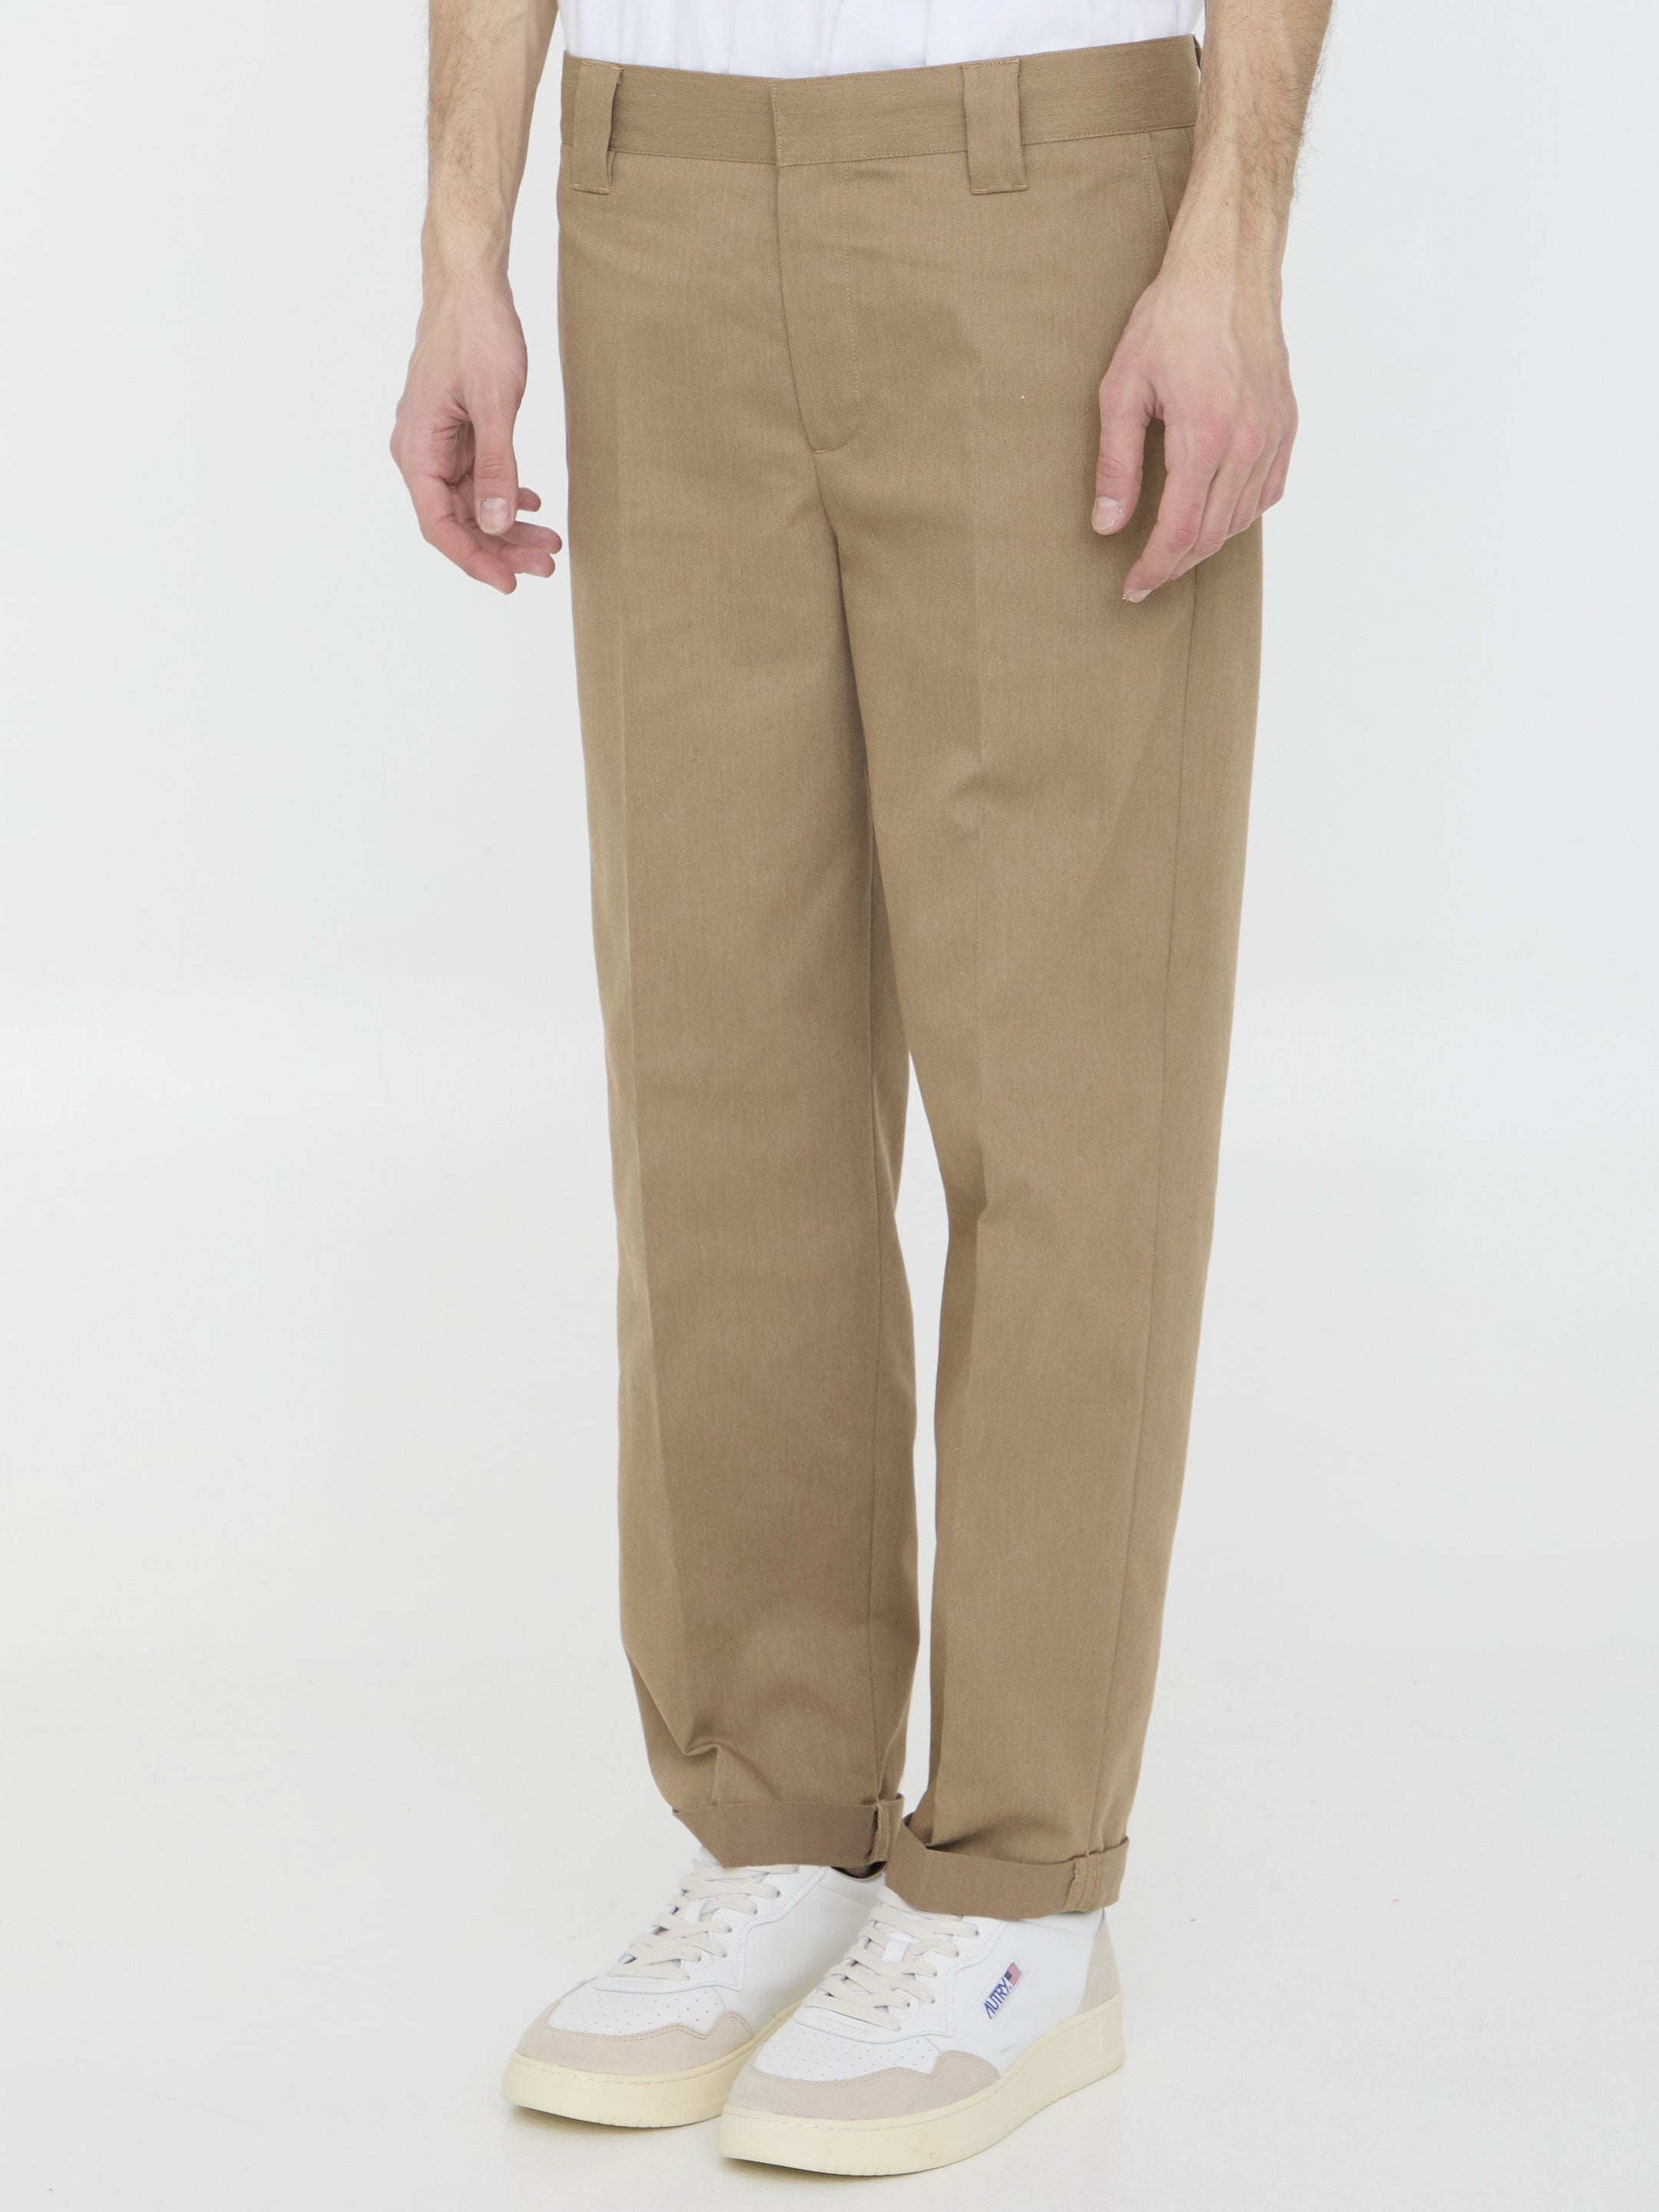 Chino pants